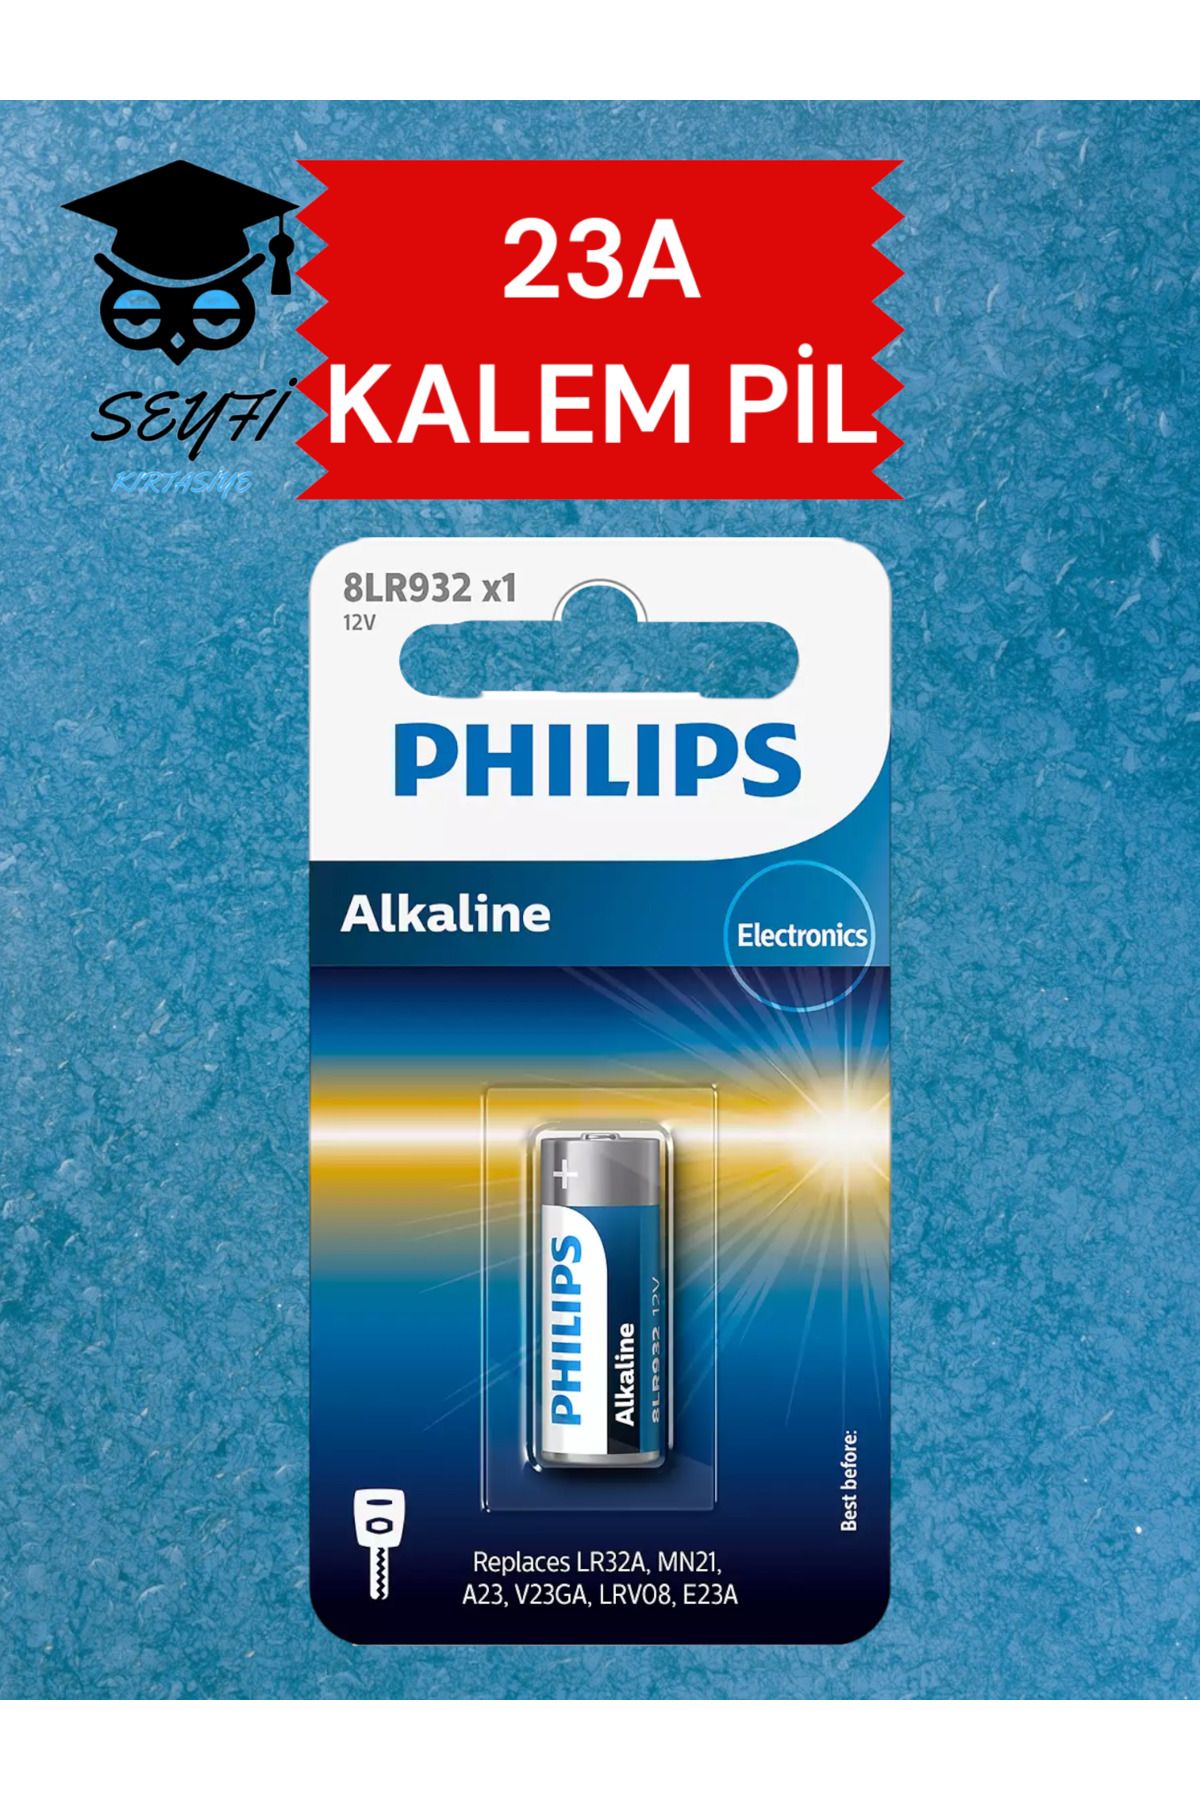 Philips MİNİ KALEM PİL 23A PHİLİPS ARAÇ KUMANDASI  ANAHTARSIZ GİRİŞ KARTLARI VB İÇİN KALEM PİL A23 1 ADET